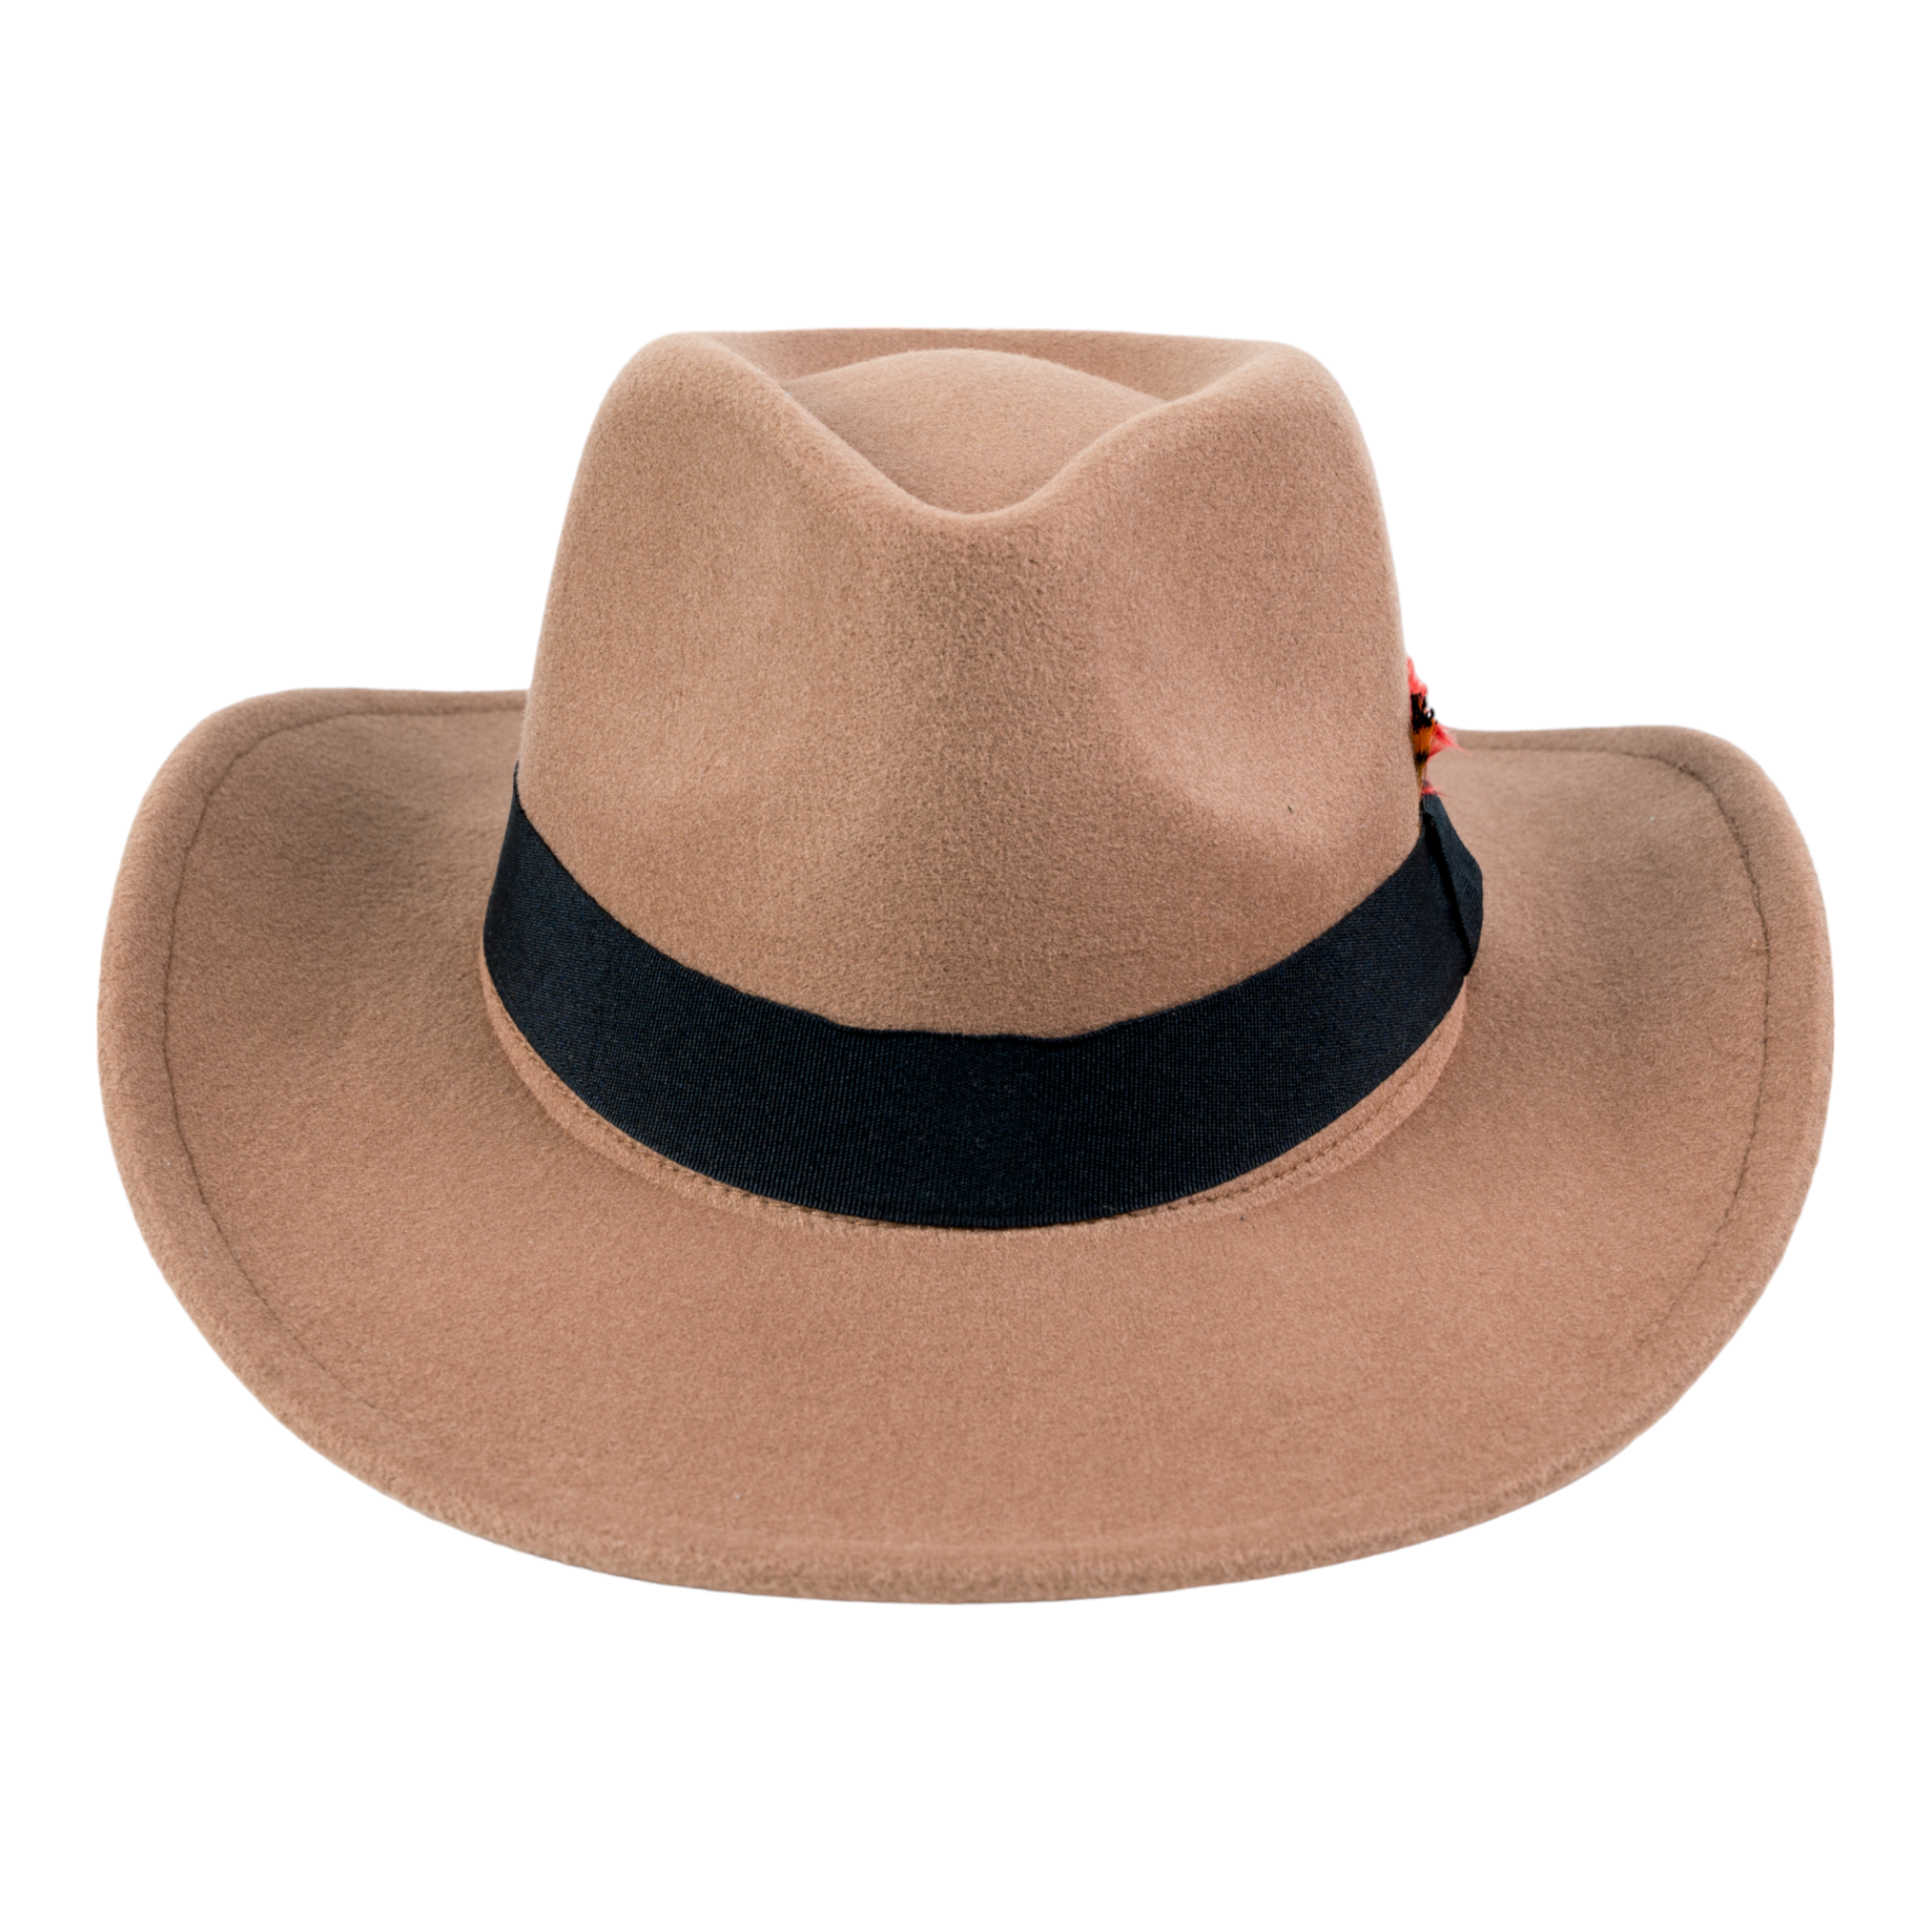 Chokore Cowboy Hat with Feather Details (Khaki)